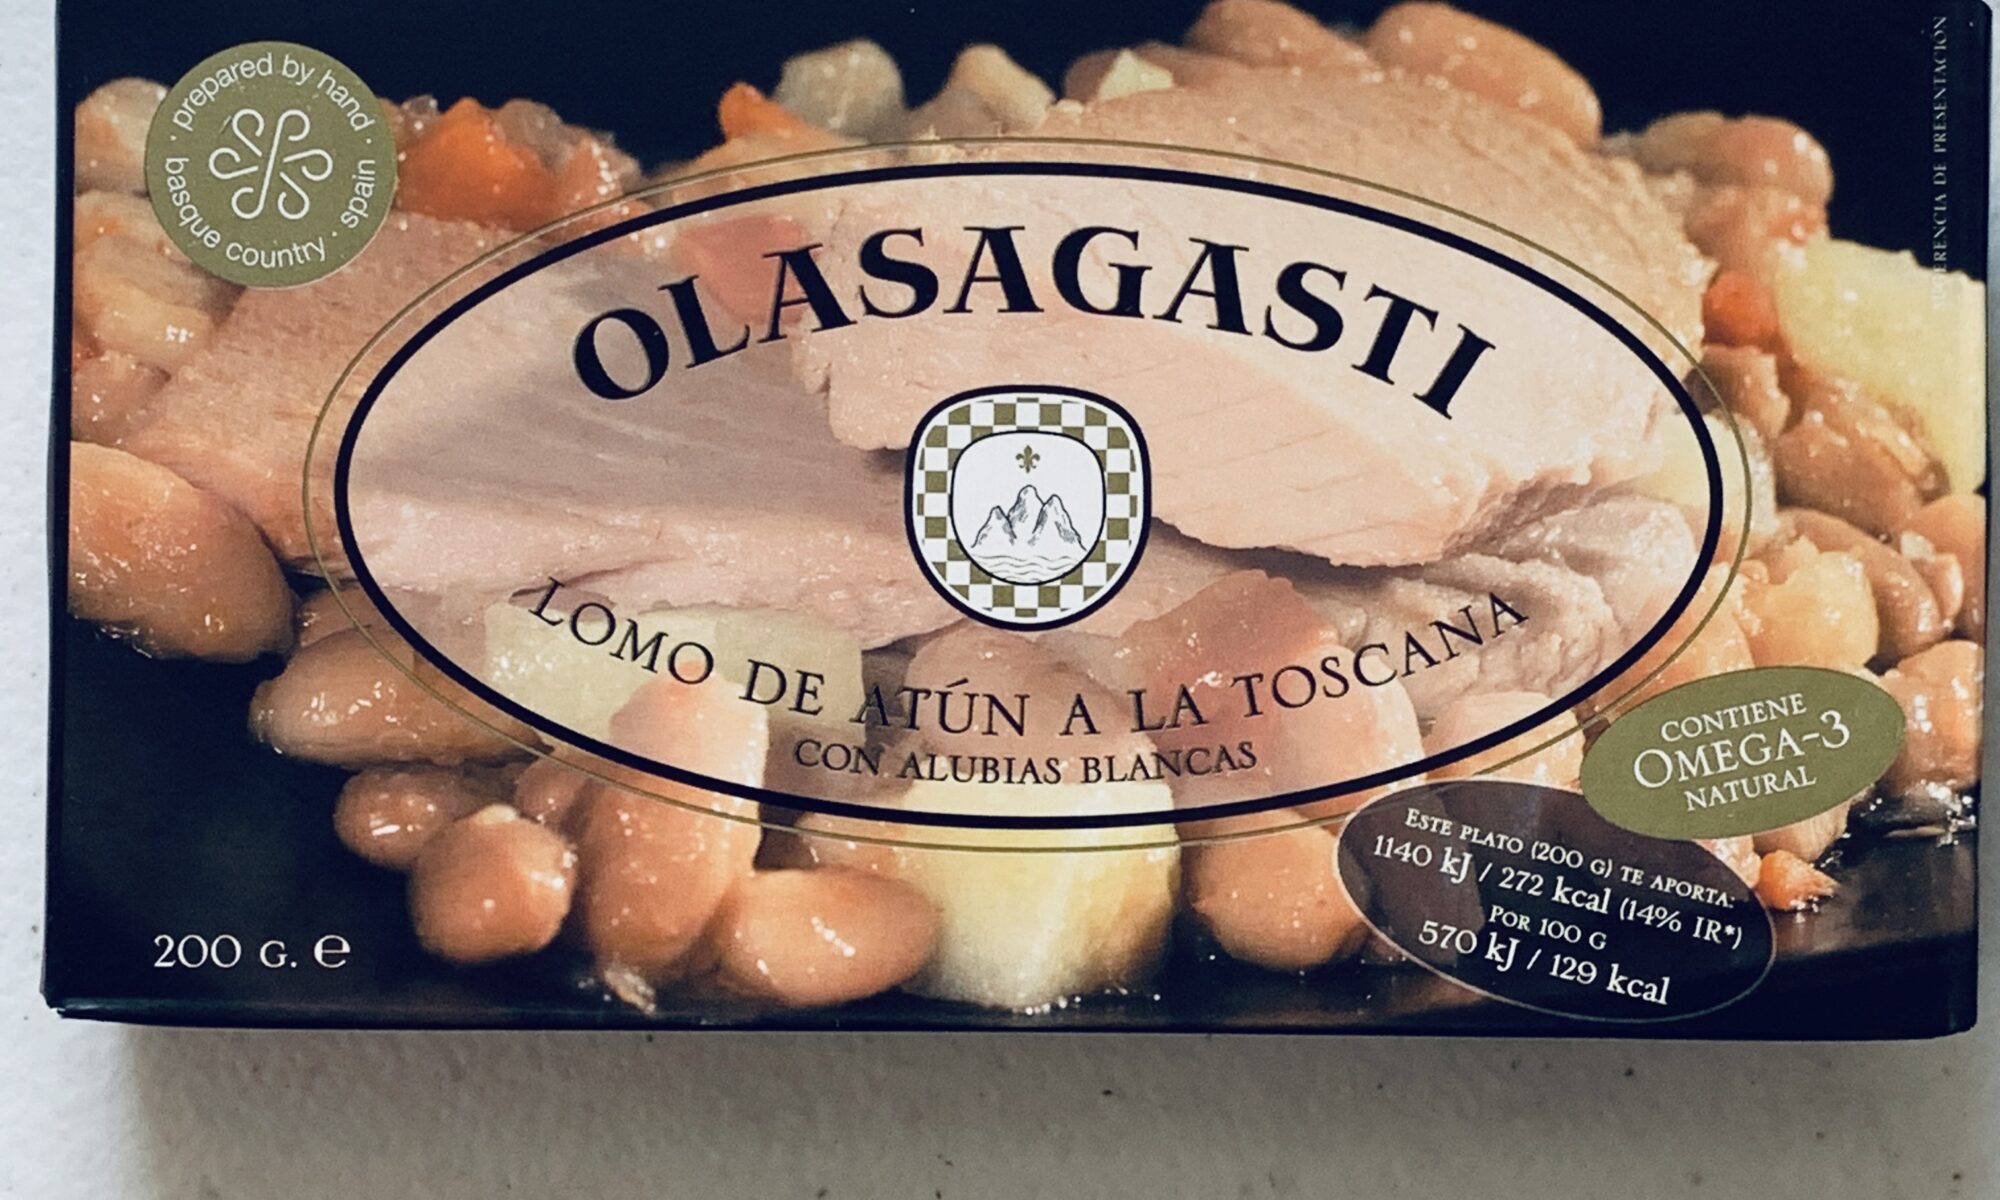 Image of the front of package of Olasagasti Lomo de atún a la toscana, con alubias blancas (Tuna Fillet a la Toscana (with white bean stew))